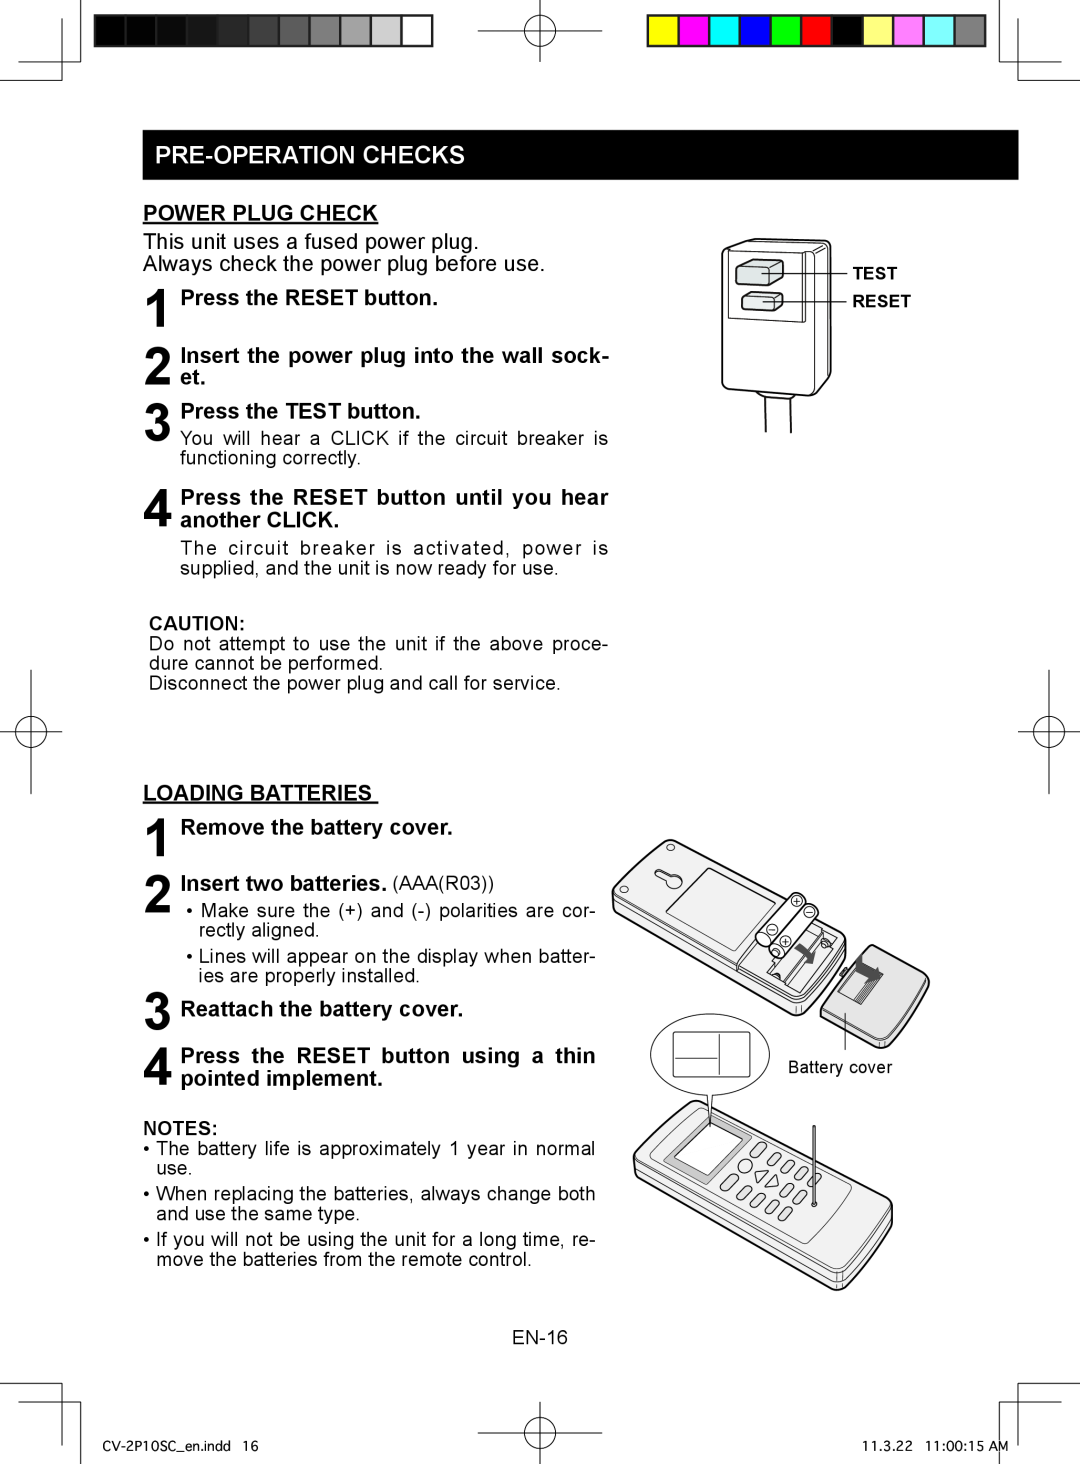 Sharp CV-2P10SC operation manual Pre-Operationchecks, Power Plug Check, Press the RESET button, Press the TEST button 